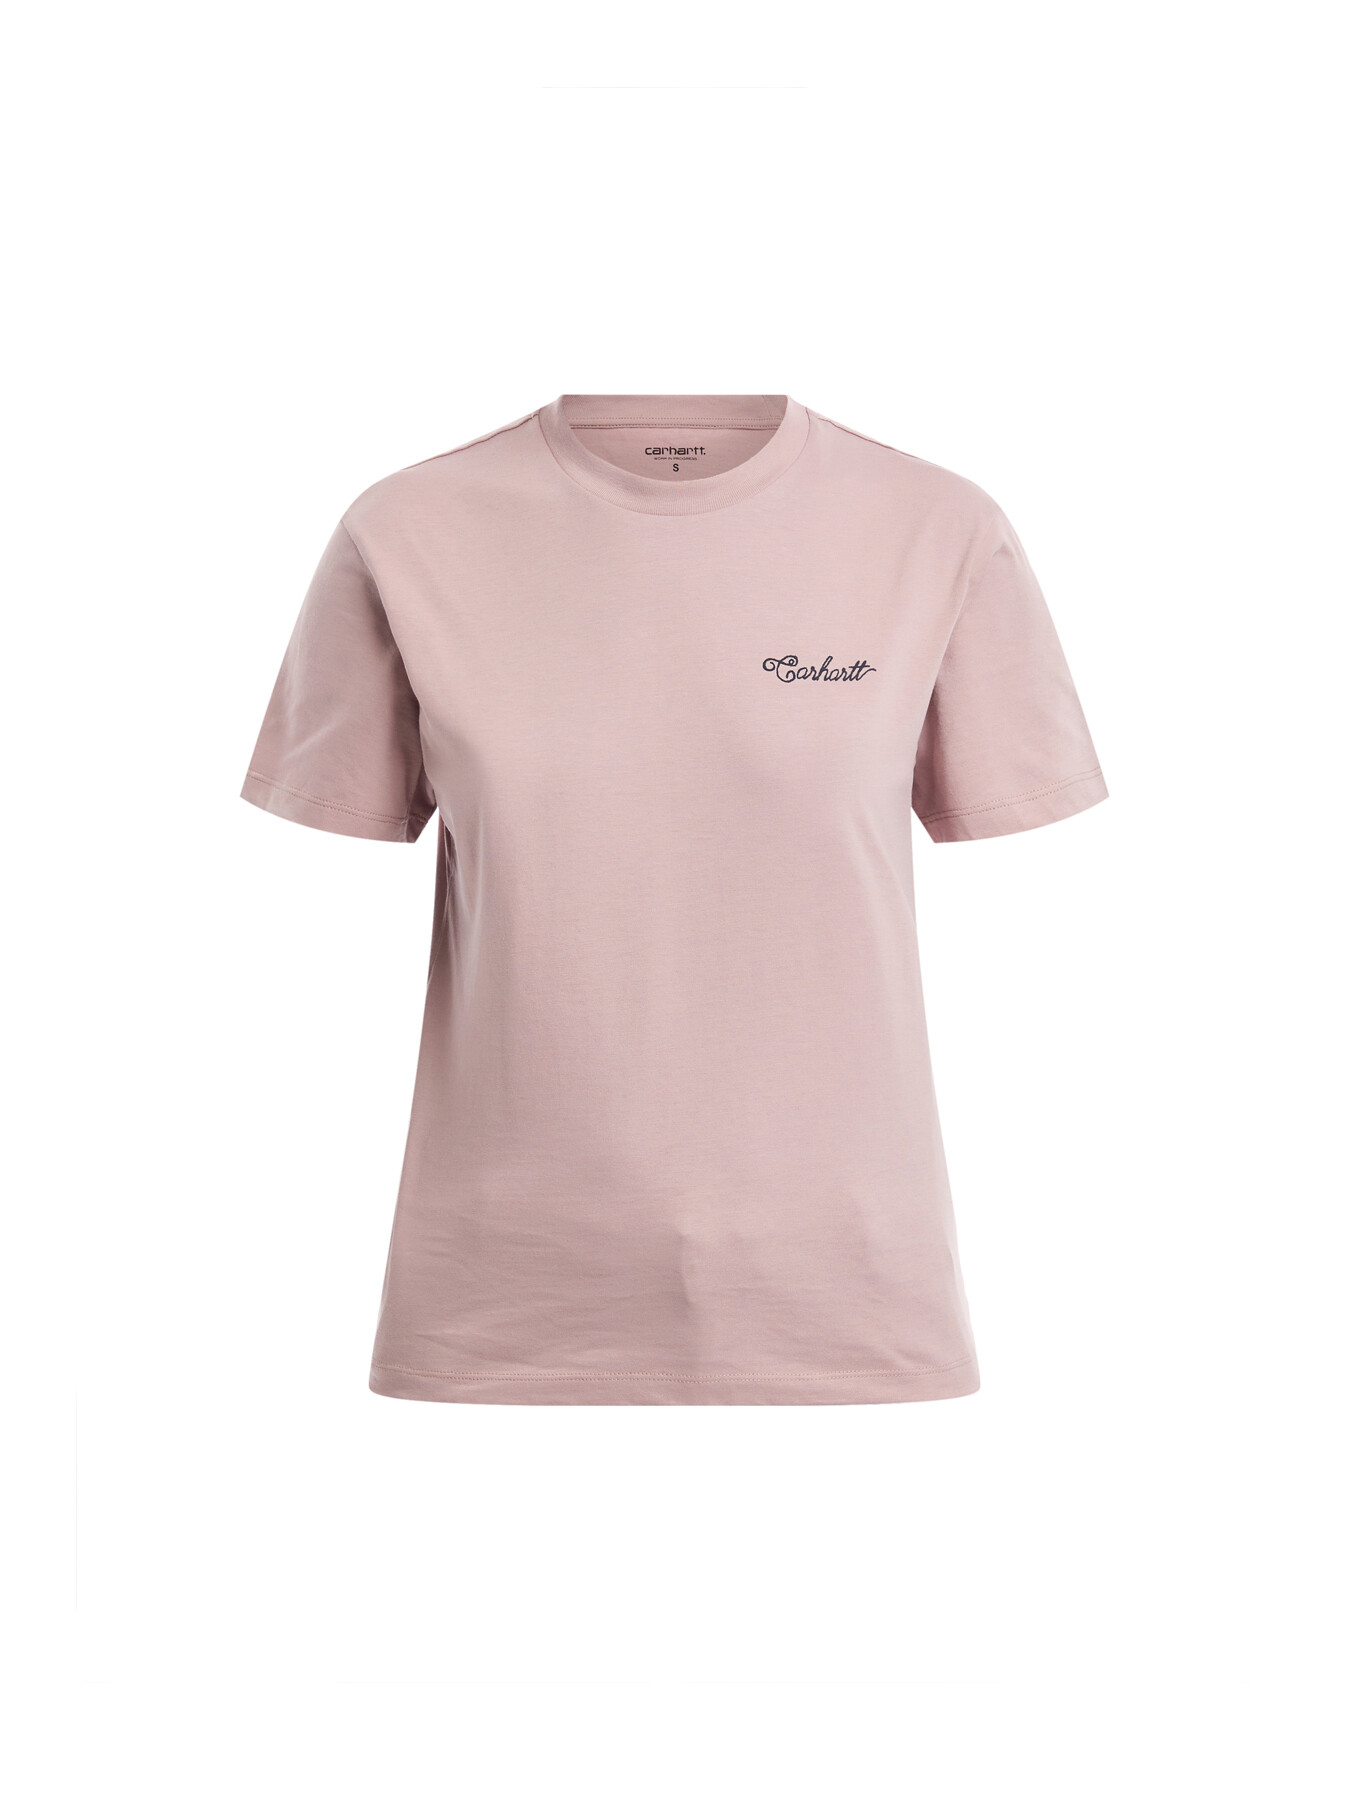 Carhartt Women's Short Sleeve Stitch T-shirt In Pink